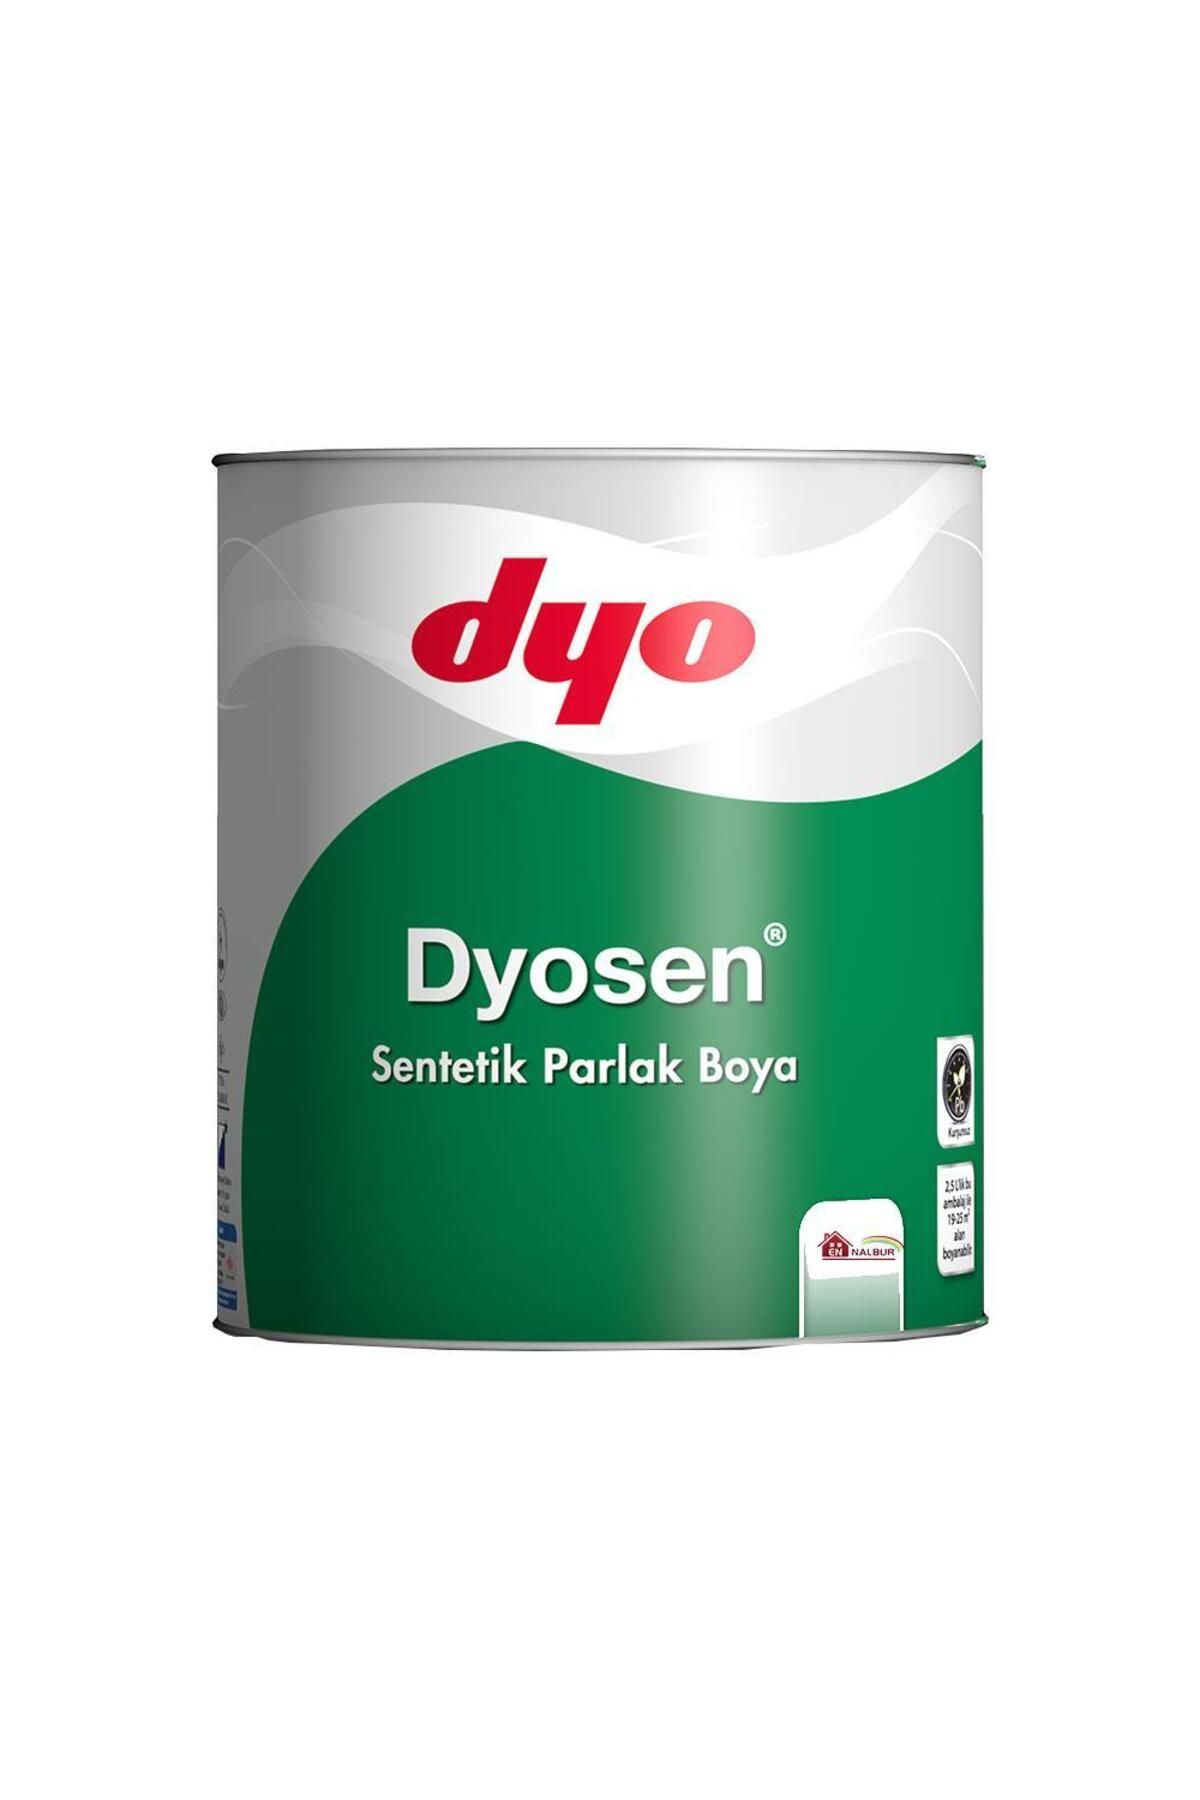 Dyo Dyosen Sentetik Parlak Boya 0,75 Lt Gri - 61577